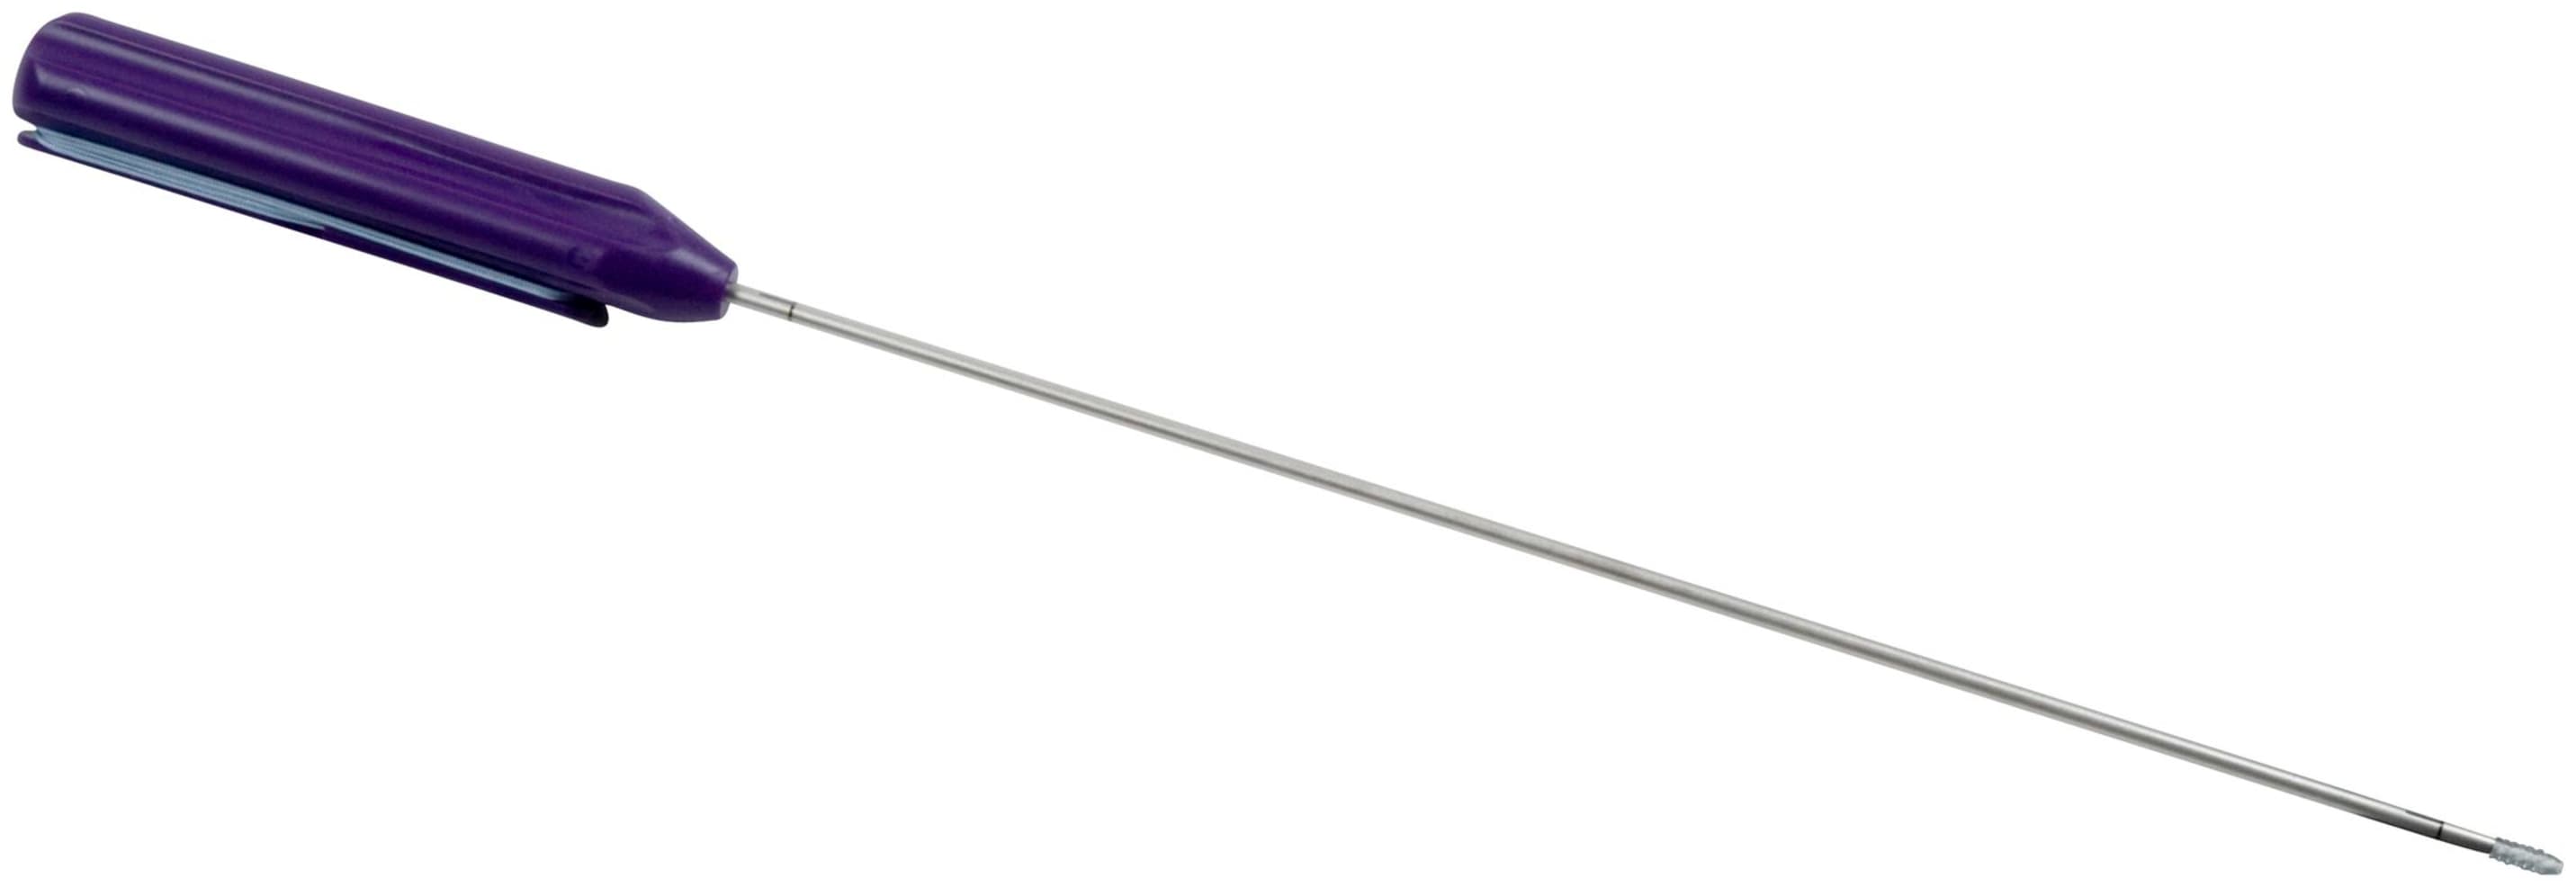 Bio-SutureTak Suture Anchor, 3 mm x 14.5 mm w #2 FiberWire, qty. 5